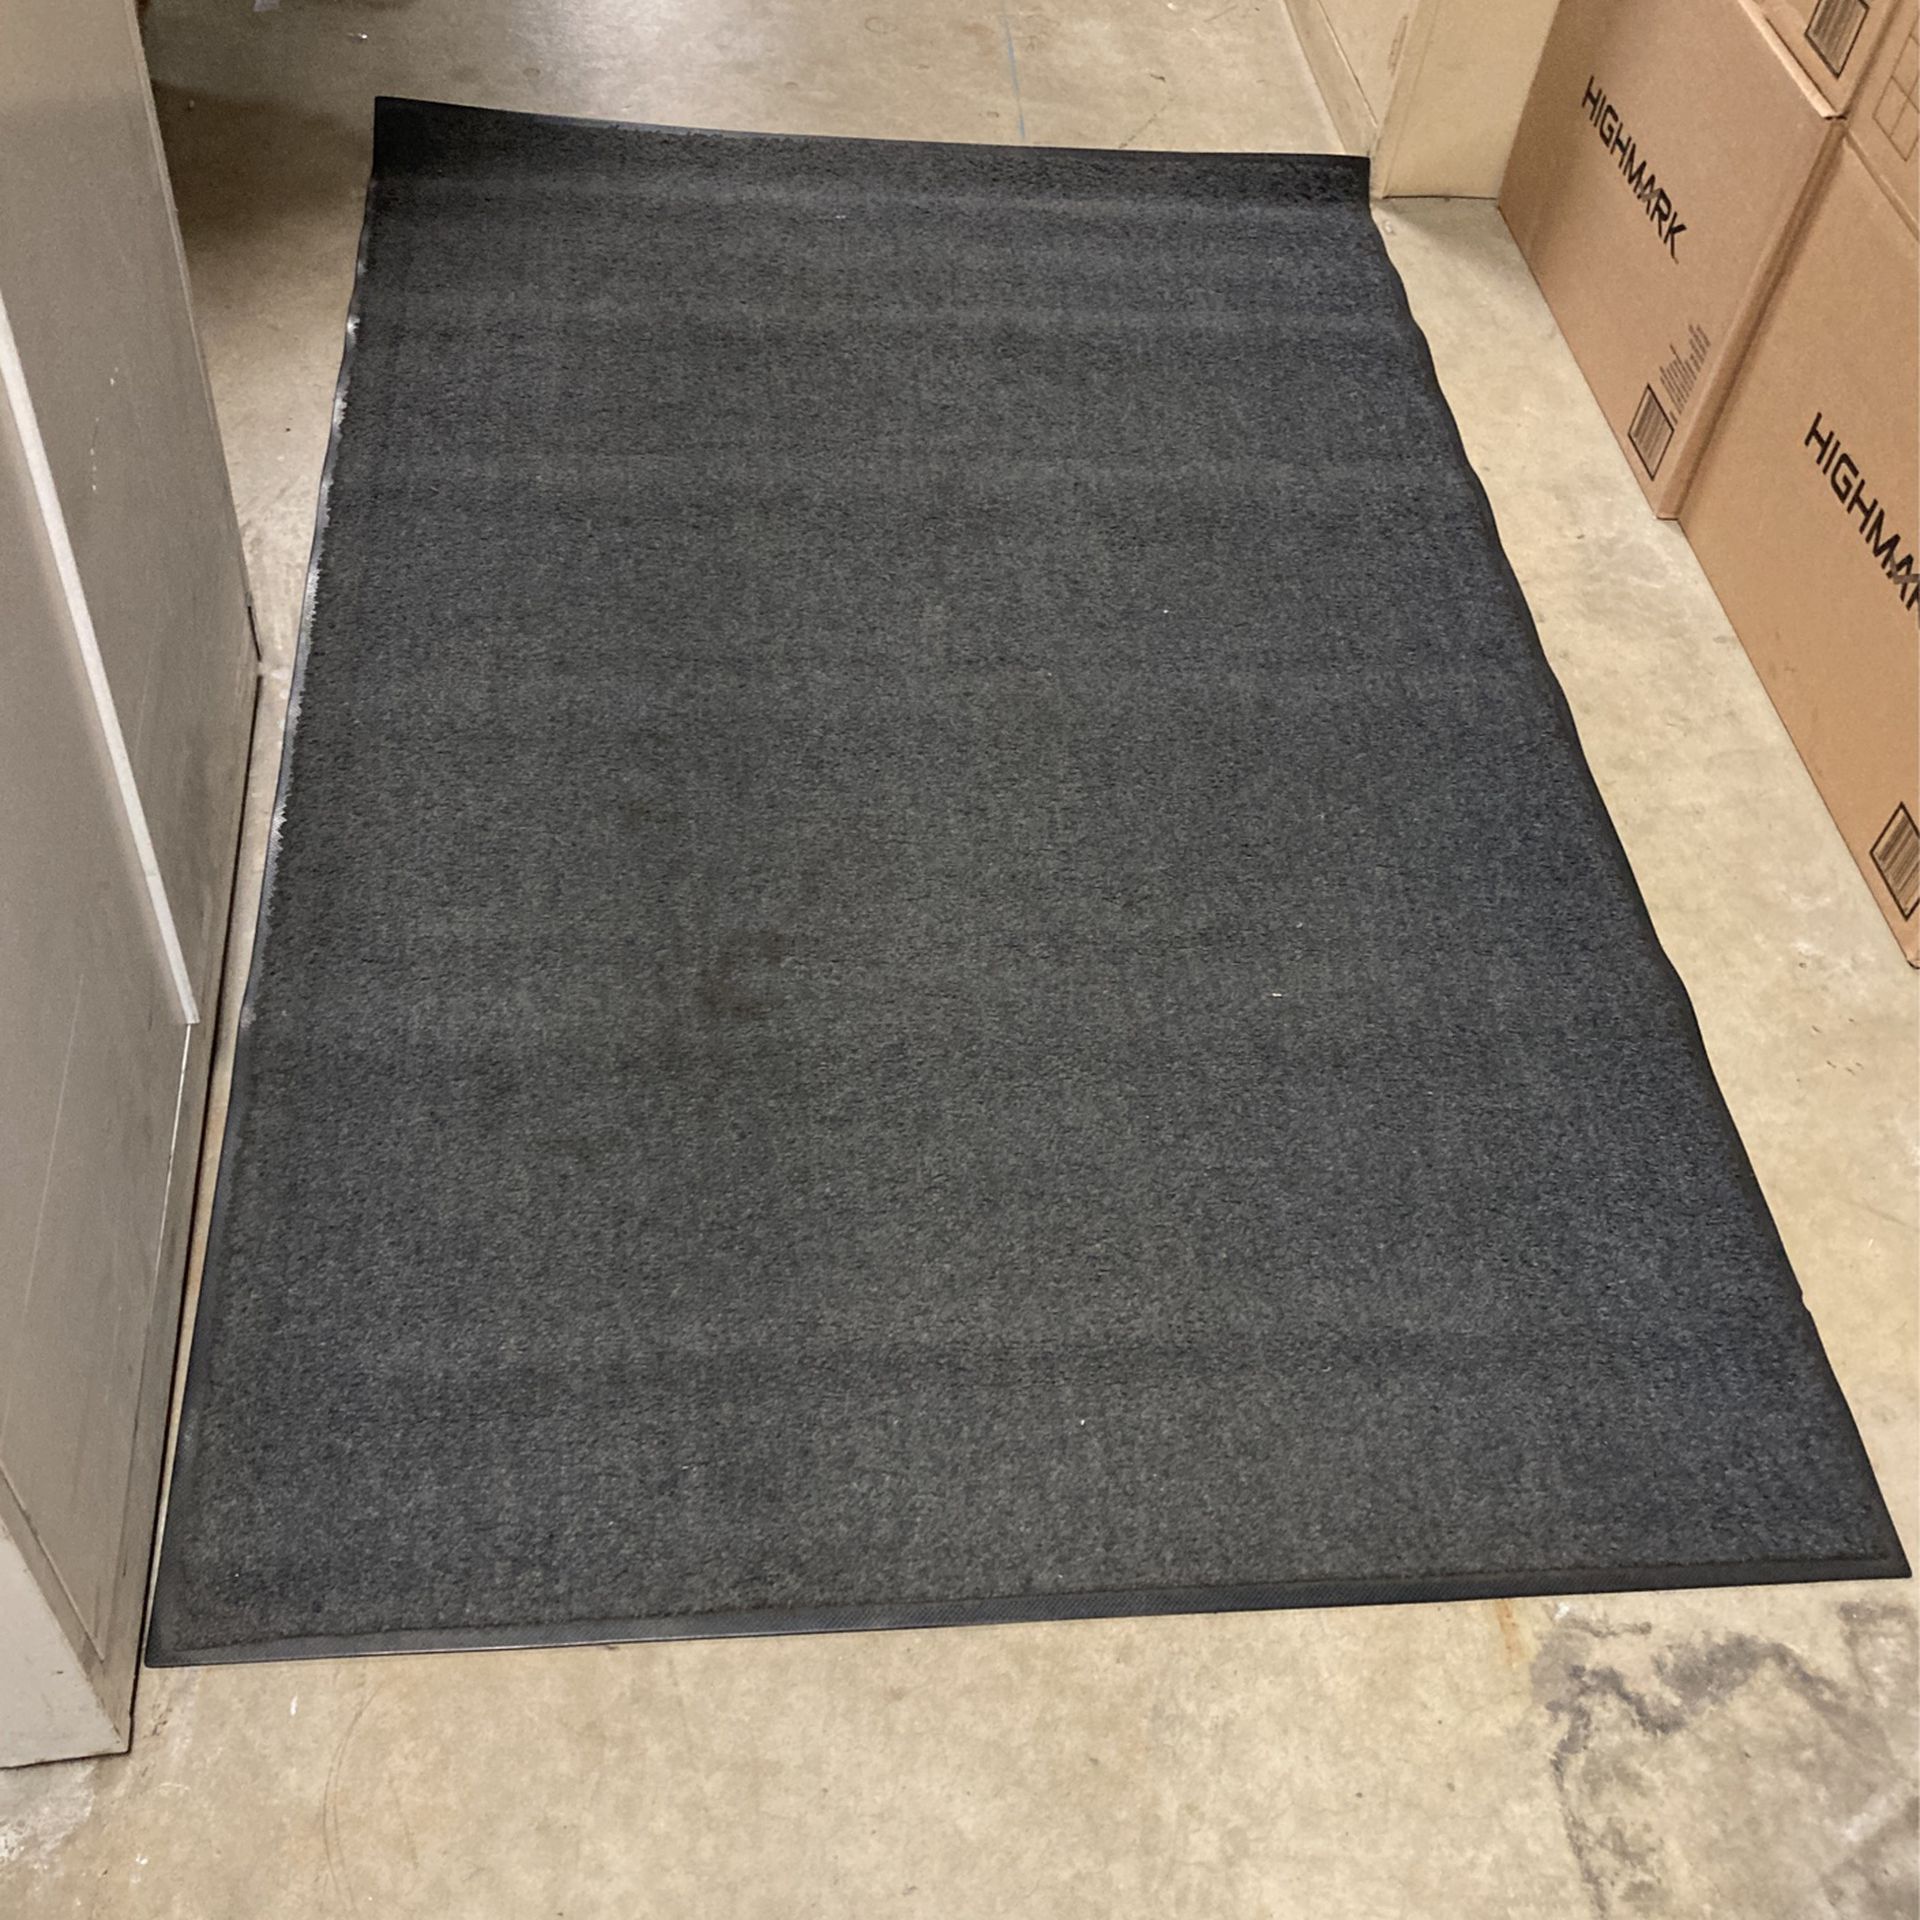 Floor Carpet 6X4.       20 Dollars